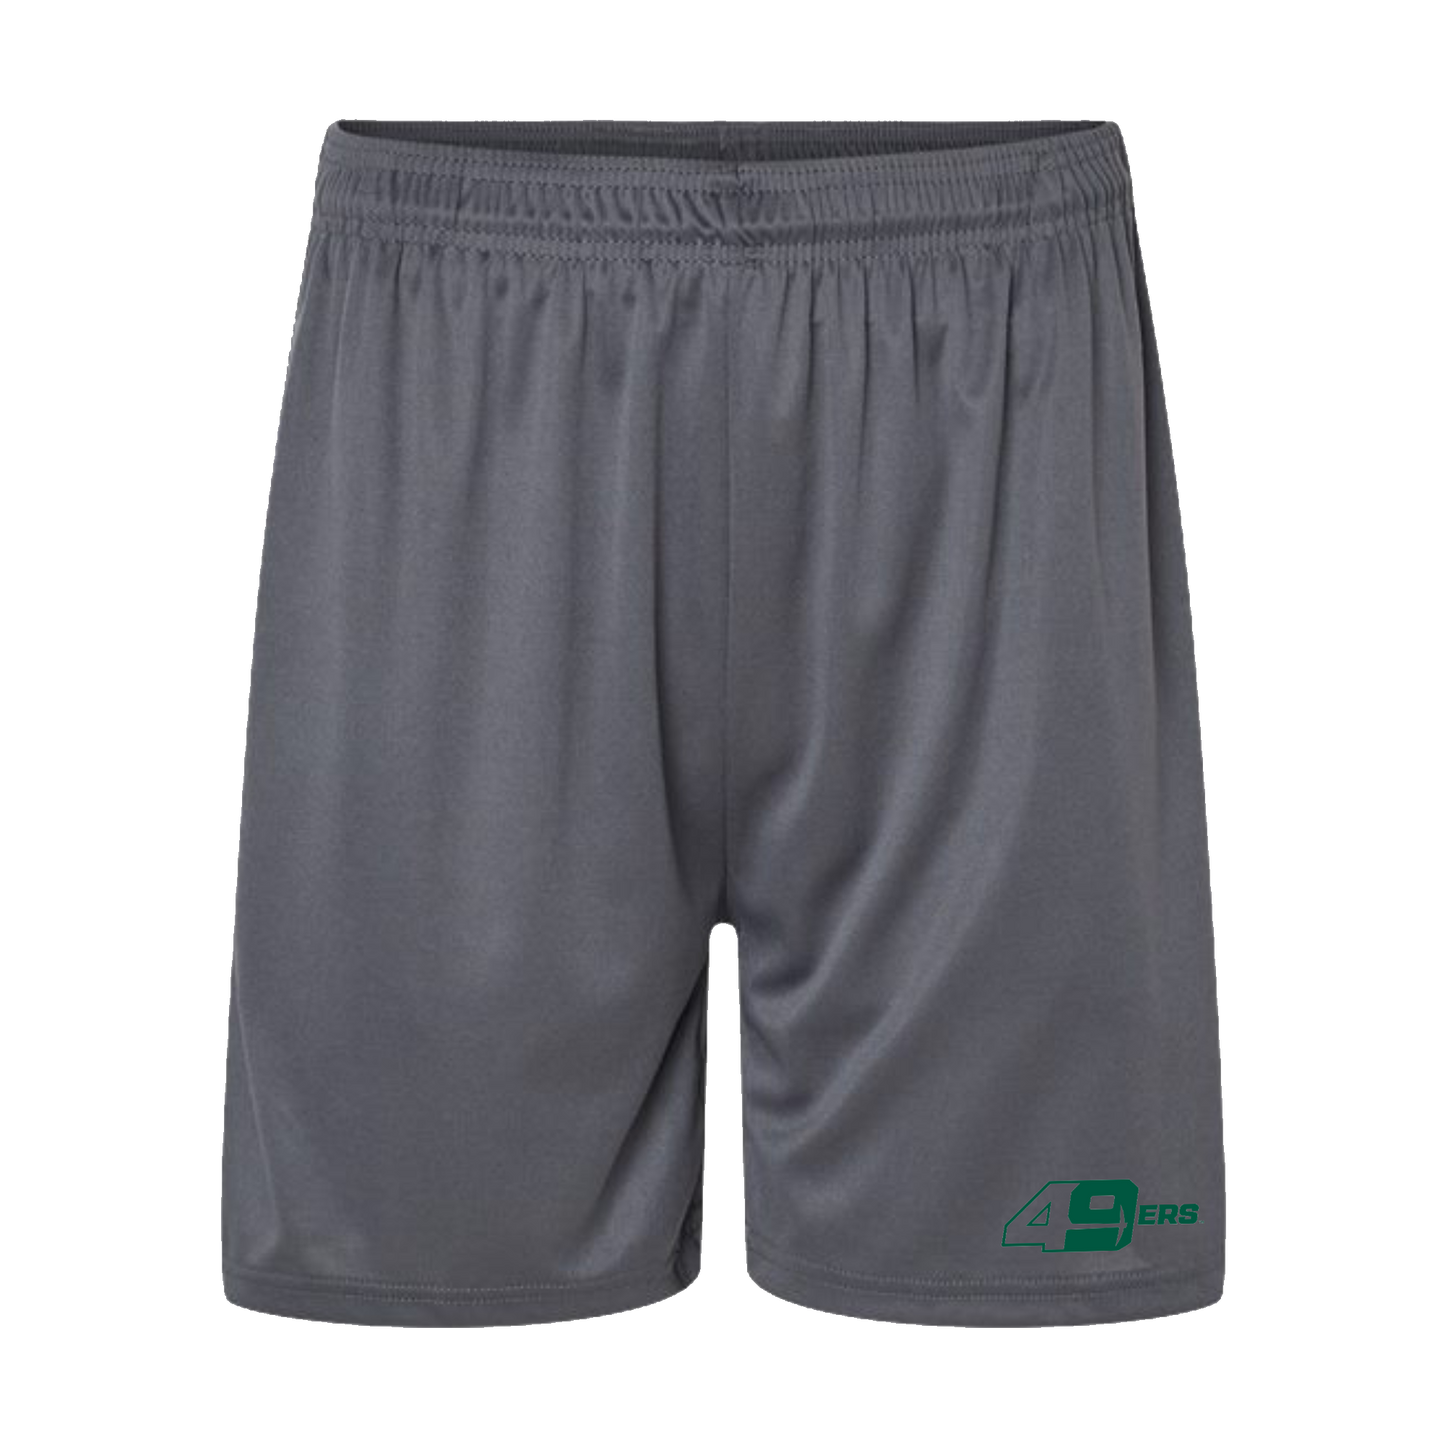 Charlotte 49ers Logo Graphite Athletic Pocket Shorts